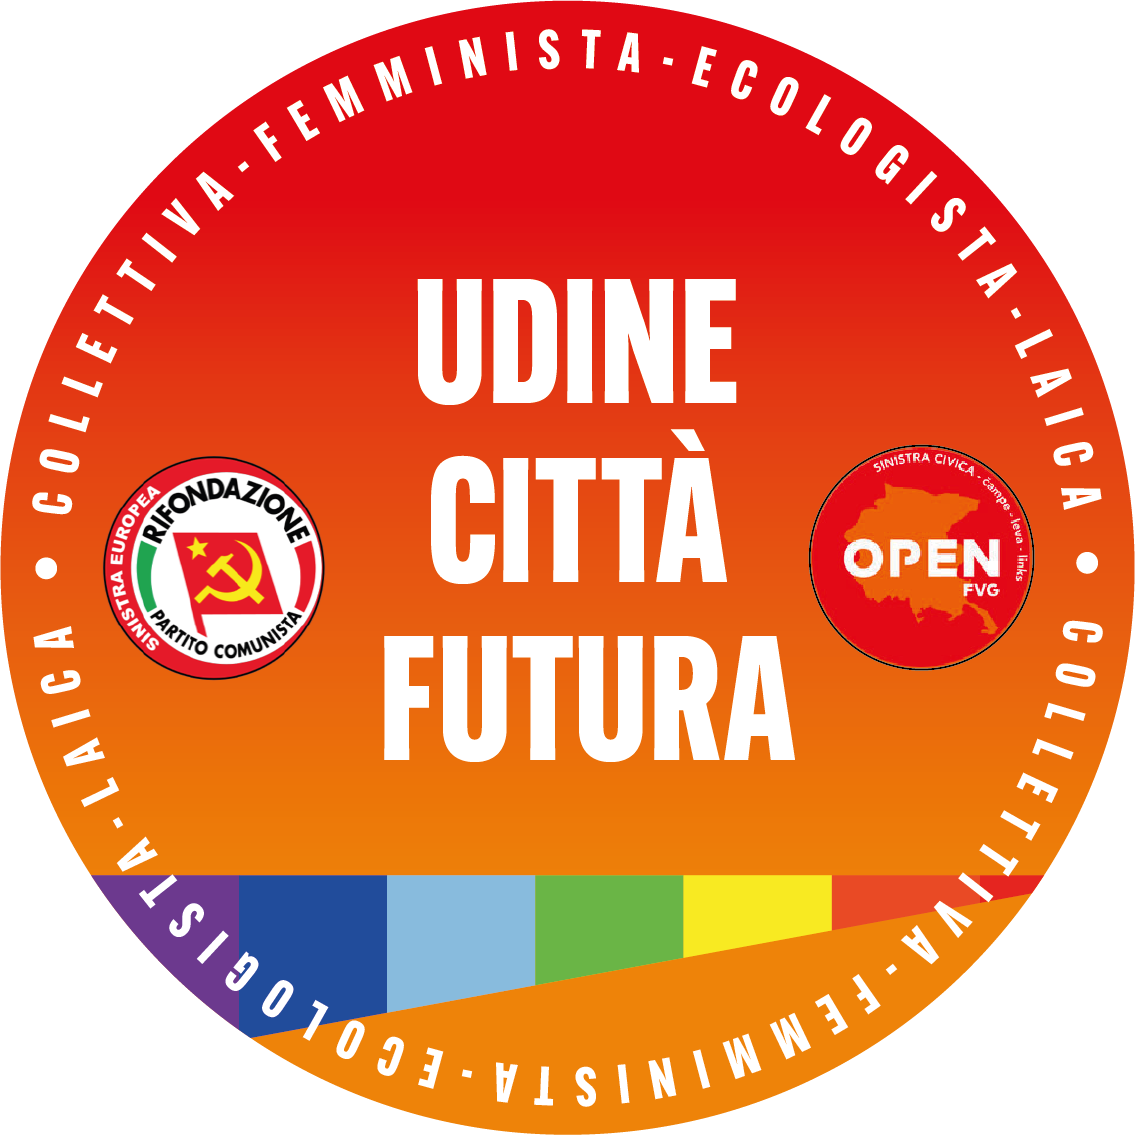 Udine Città Futura